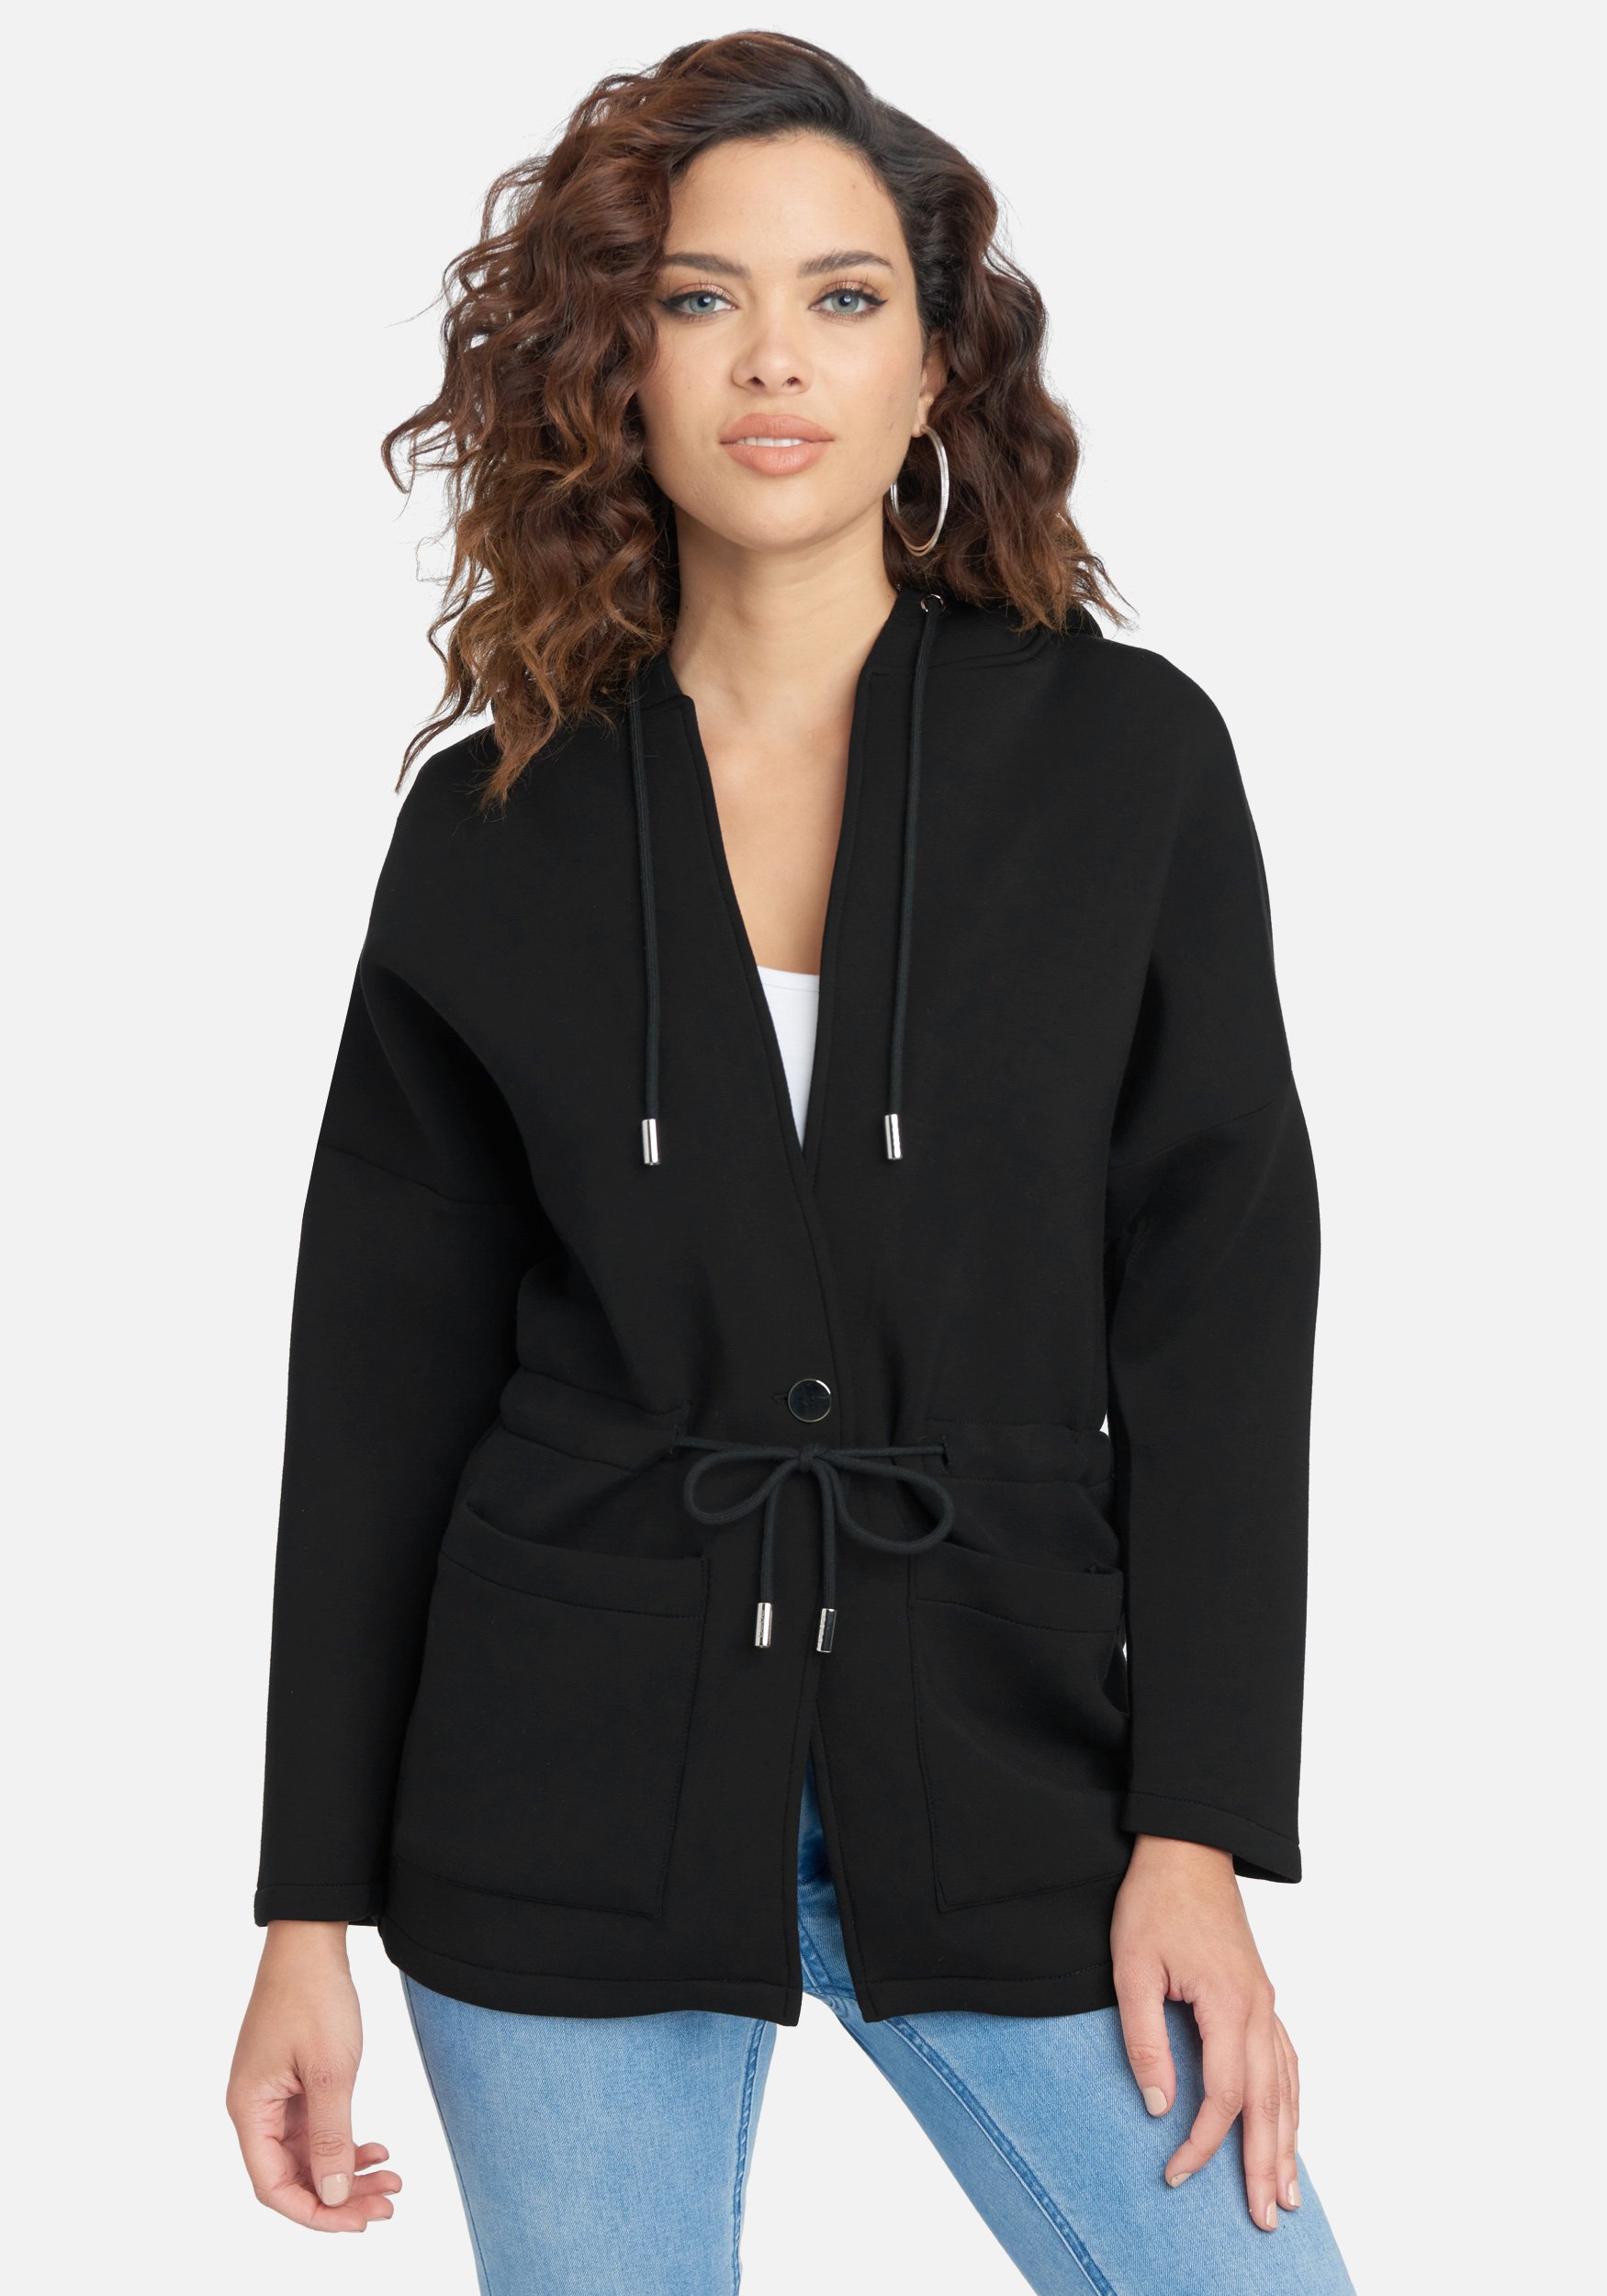 Bebe Women's Cinched Waist Hooded Jacket, Size Medium in Black Cotton/Spandex/Nylon